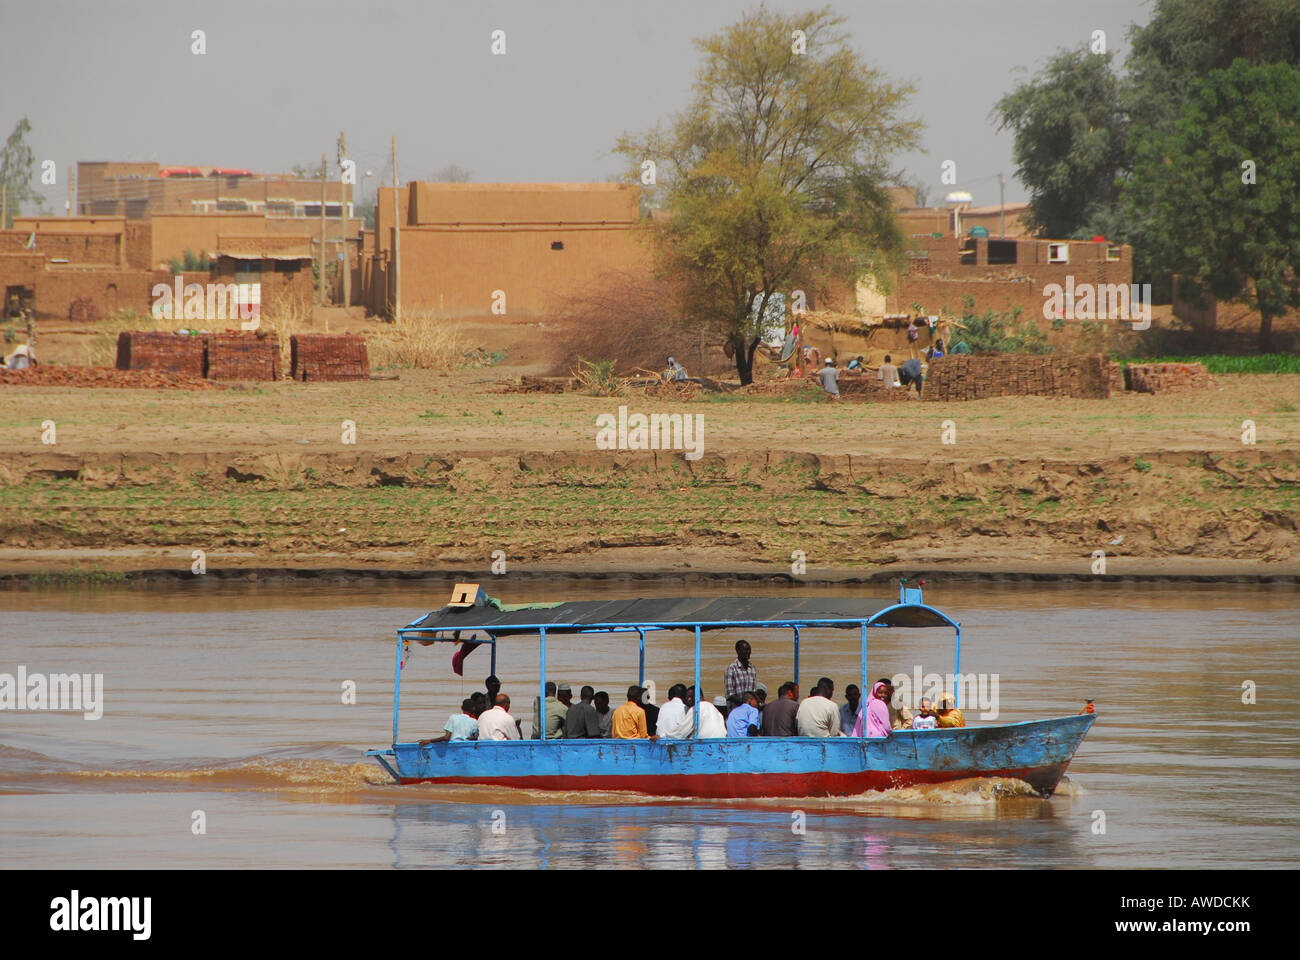 Boat on the Nile, Khartoum, Sudan, Africa Stock Photo